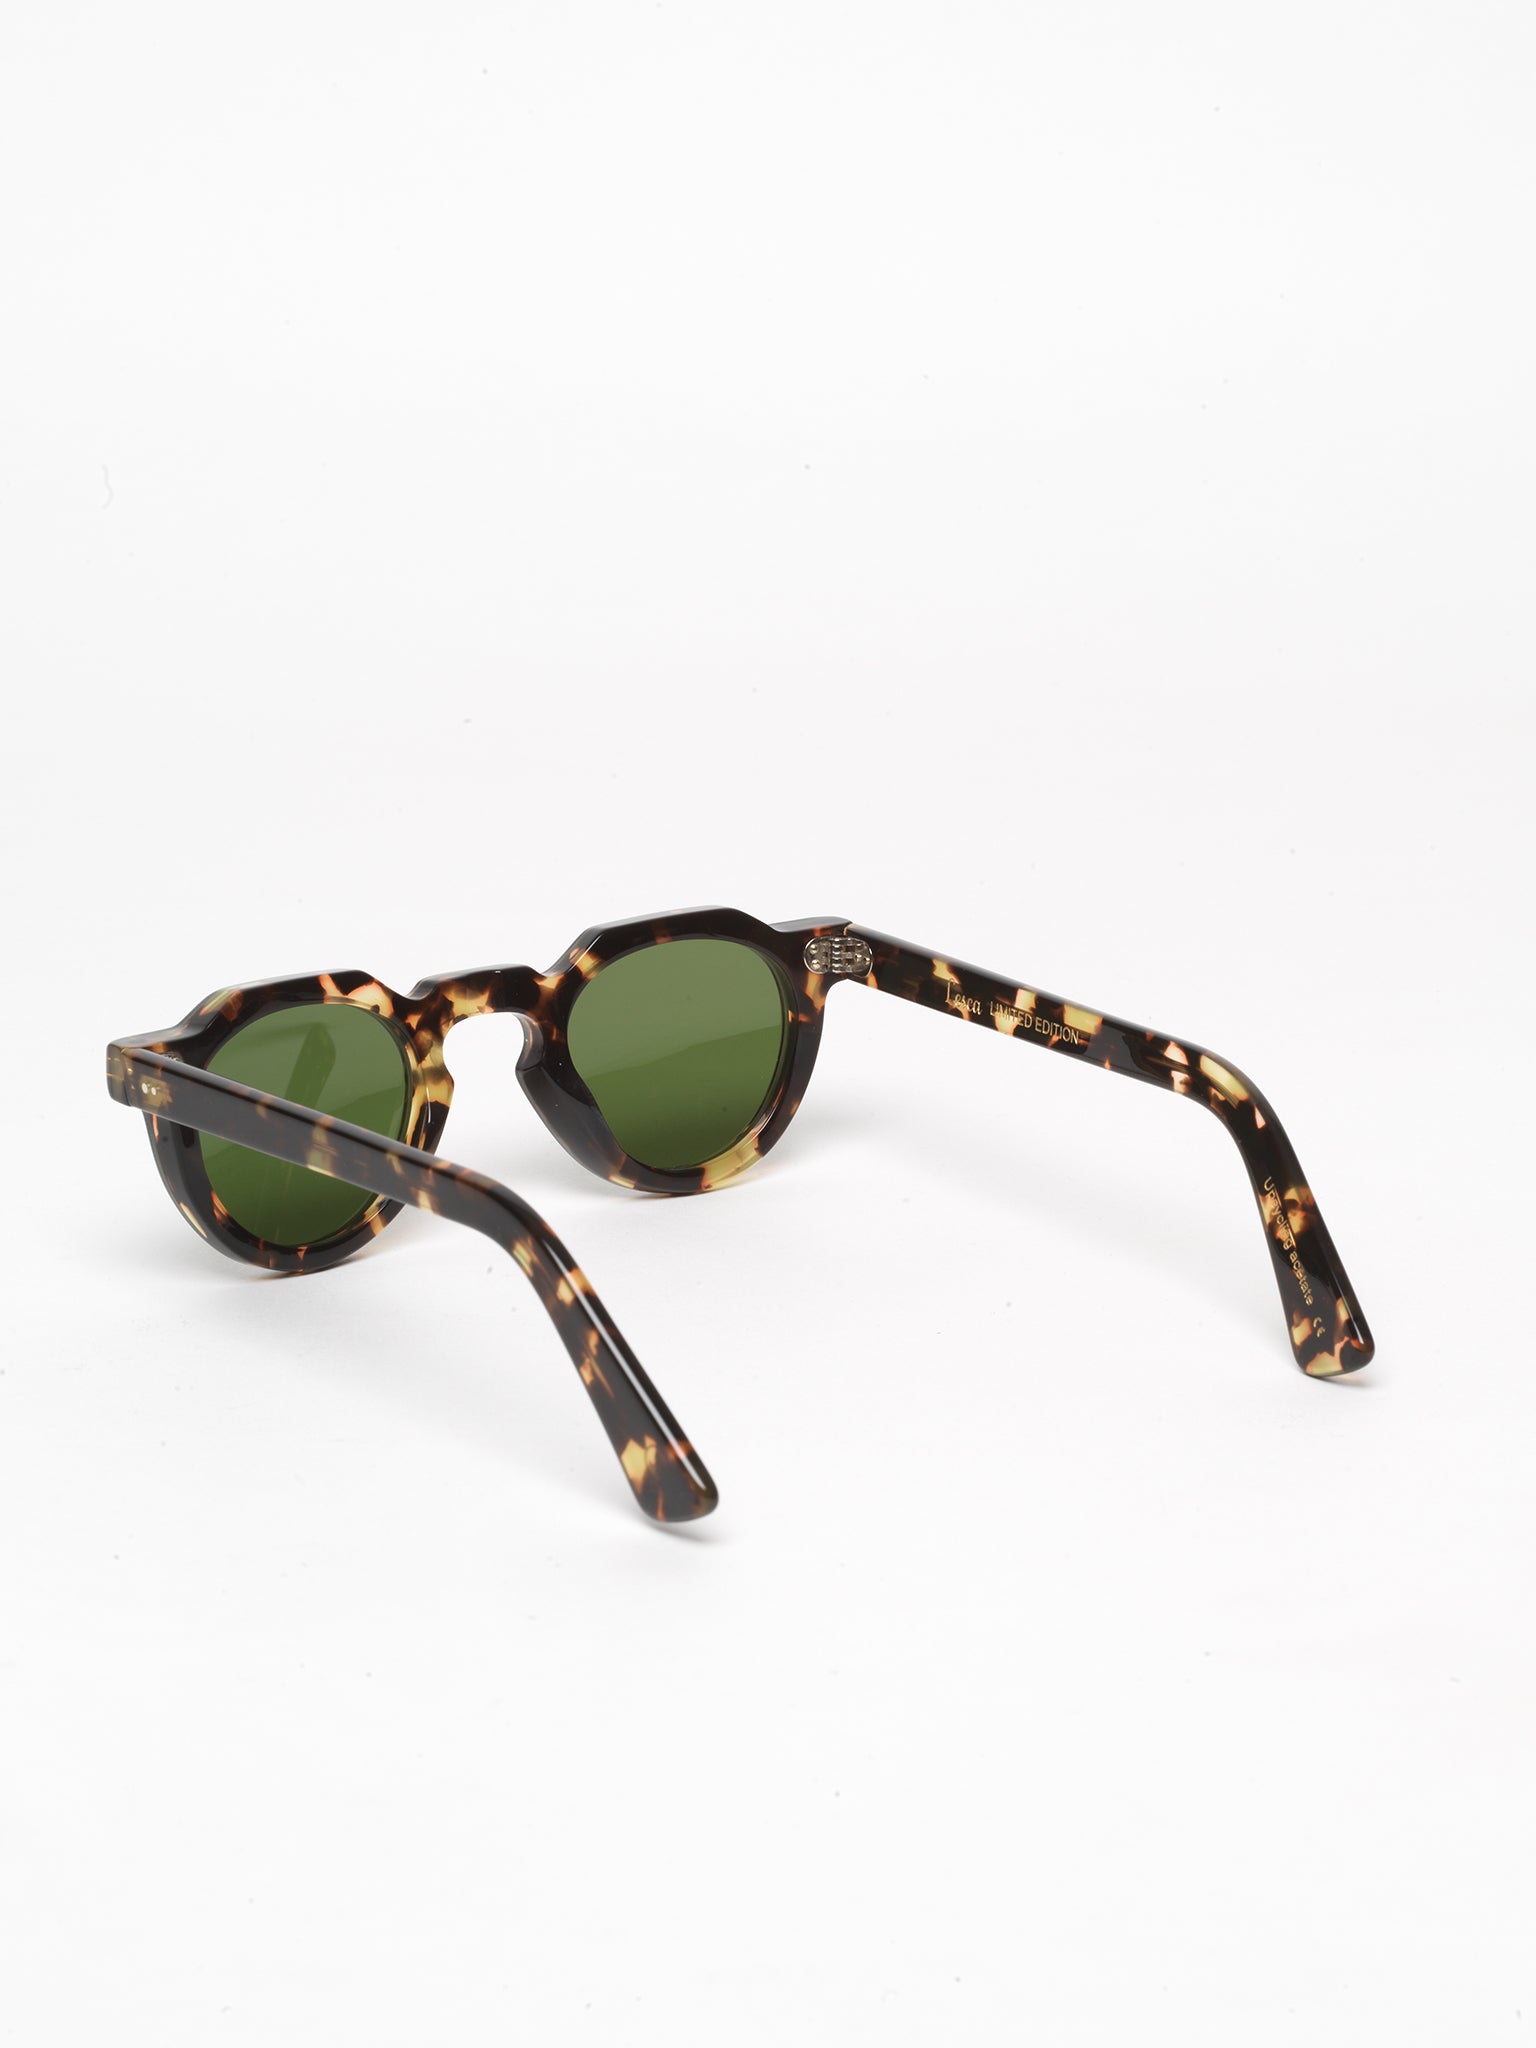 Lesca lunetier vintage clear sunglasses | nate-hospital.com